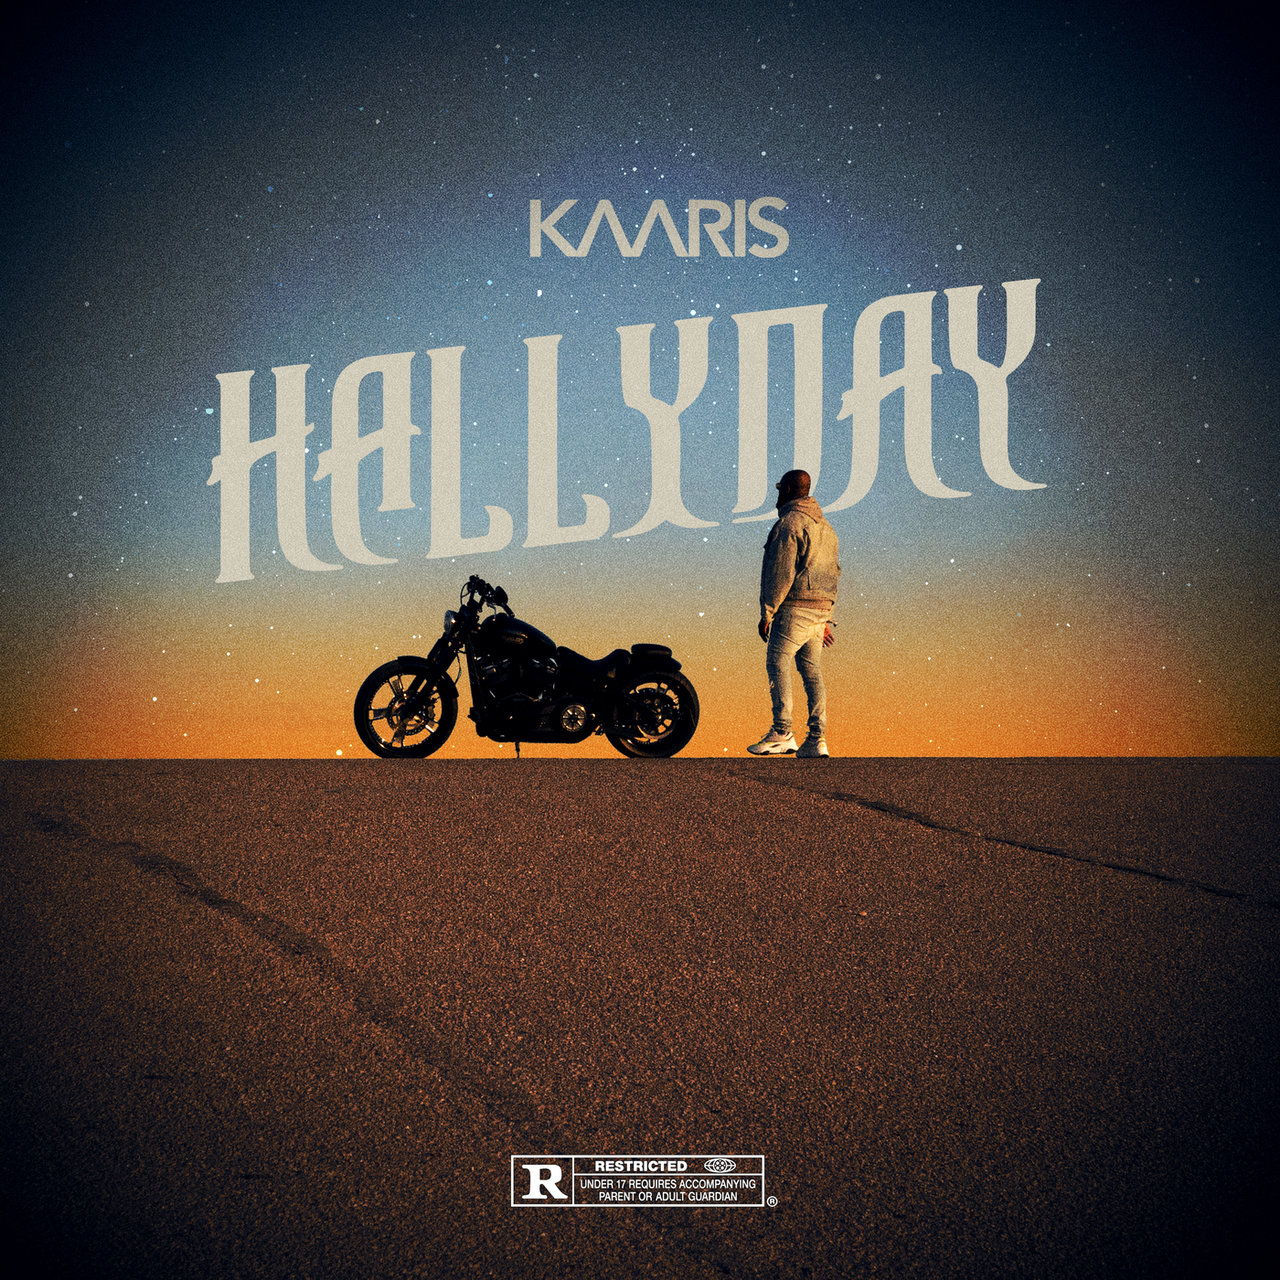 Kaaris - Hallyday (Cover)